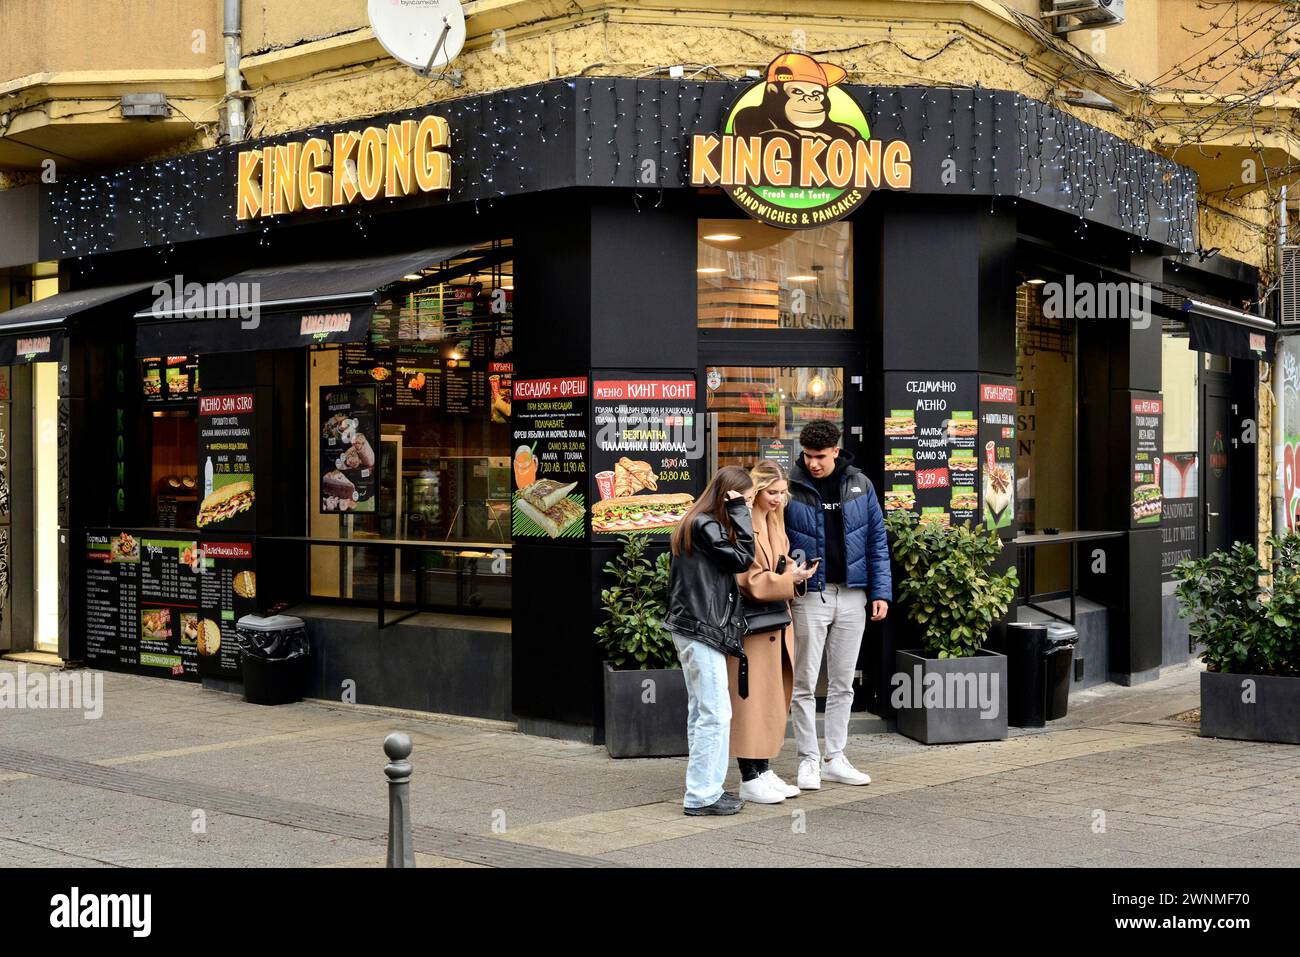 King Kong street food venue in downtown Sofia Bulgaria, Eastern Europe, Balkans, EU Stock Photo